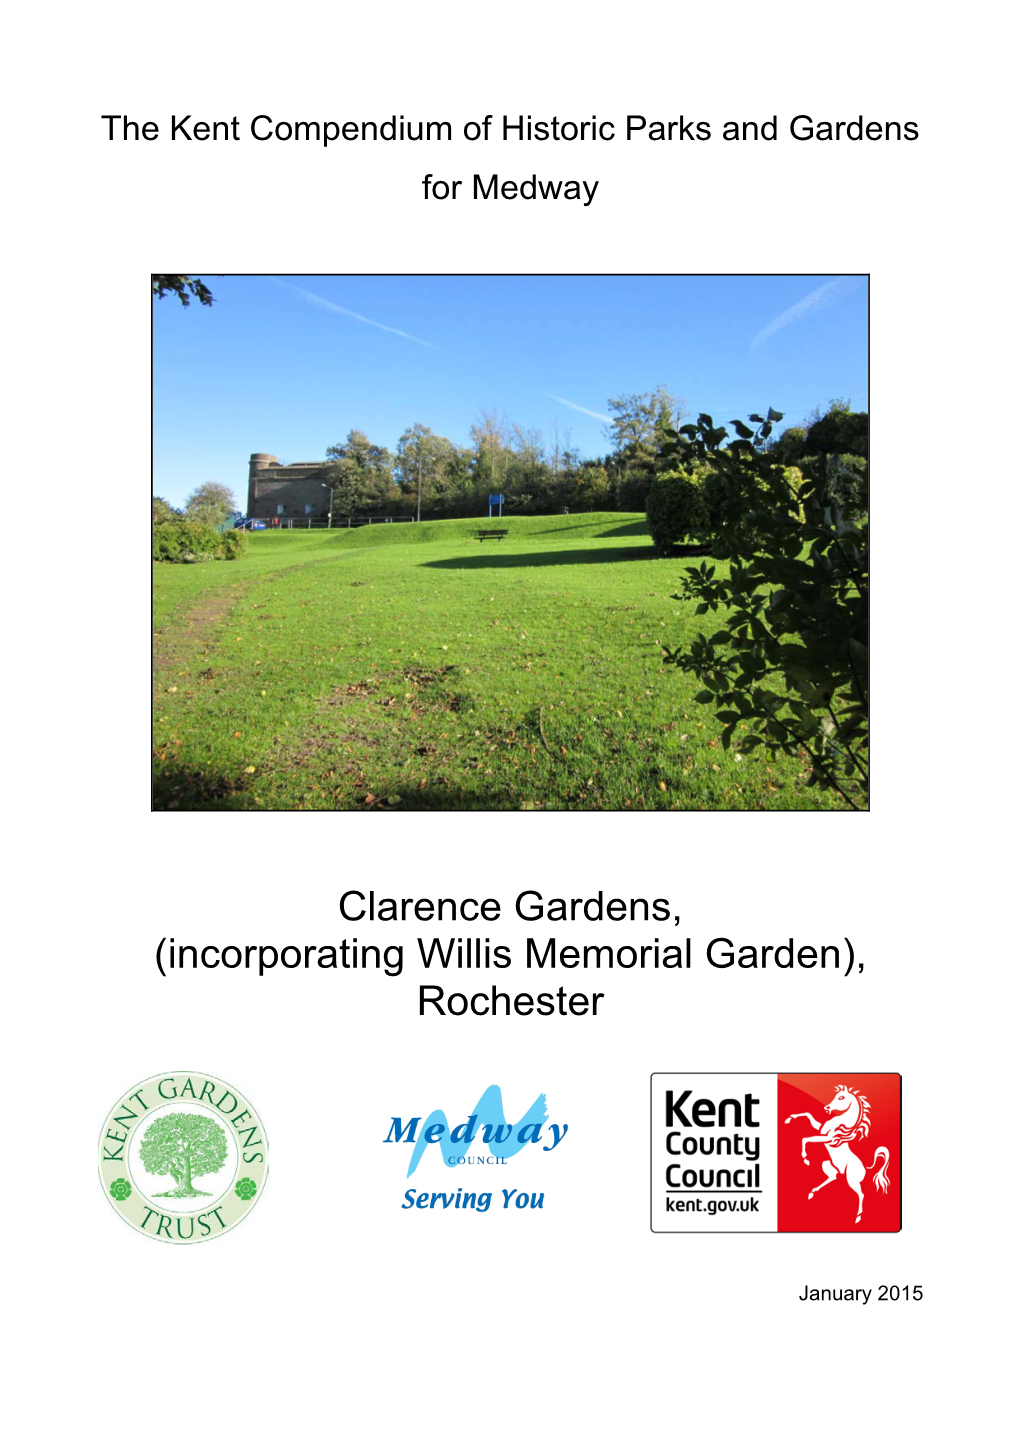 Clarence Gardens, (Incorporating Willis Memorial Garden), Rochester